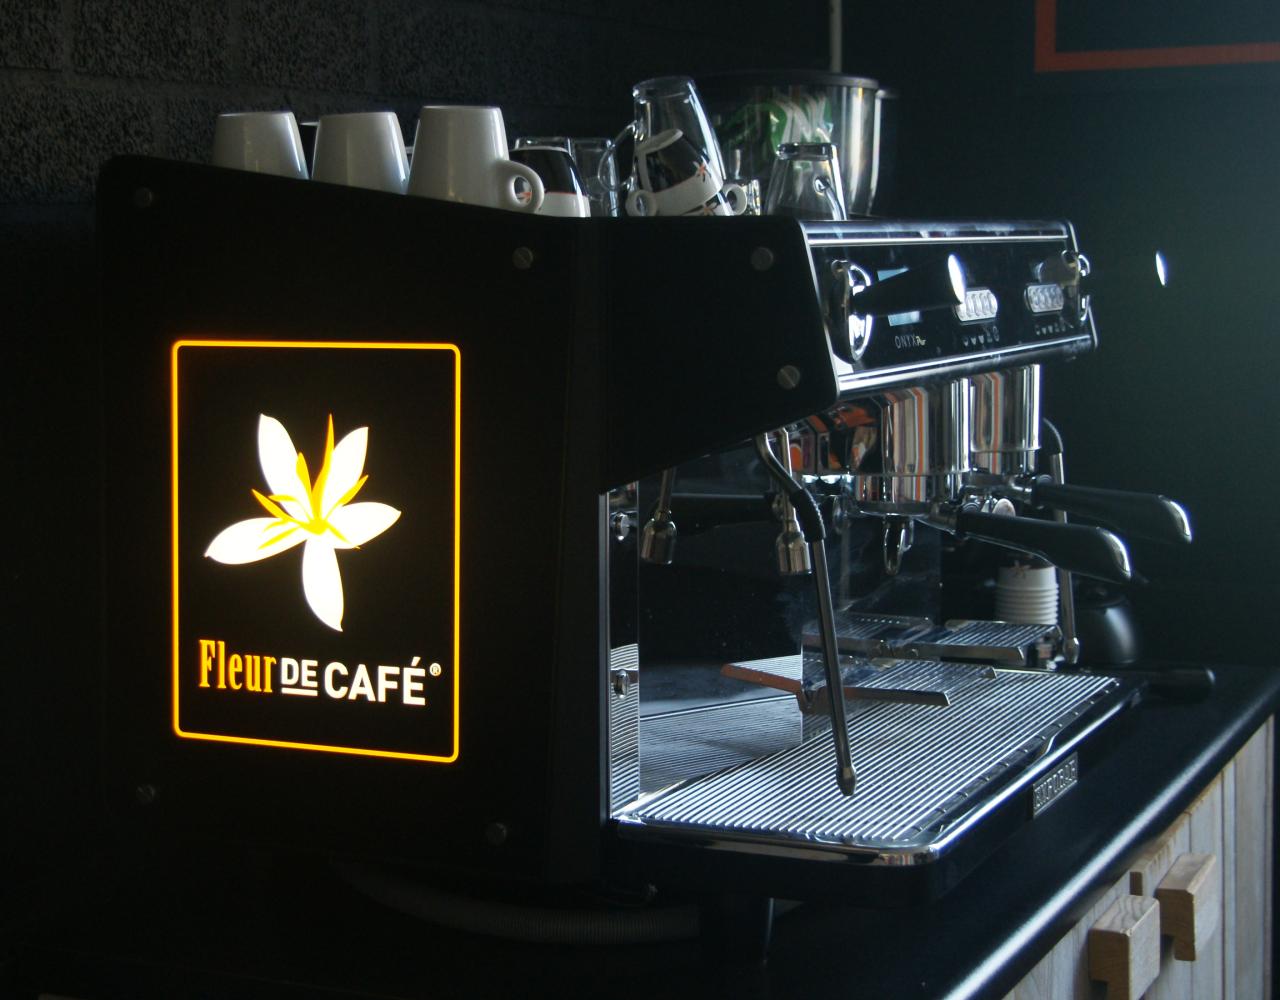 Expobar Onyx Pro espressomachine van Fleur de cafe